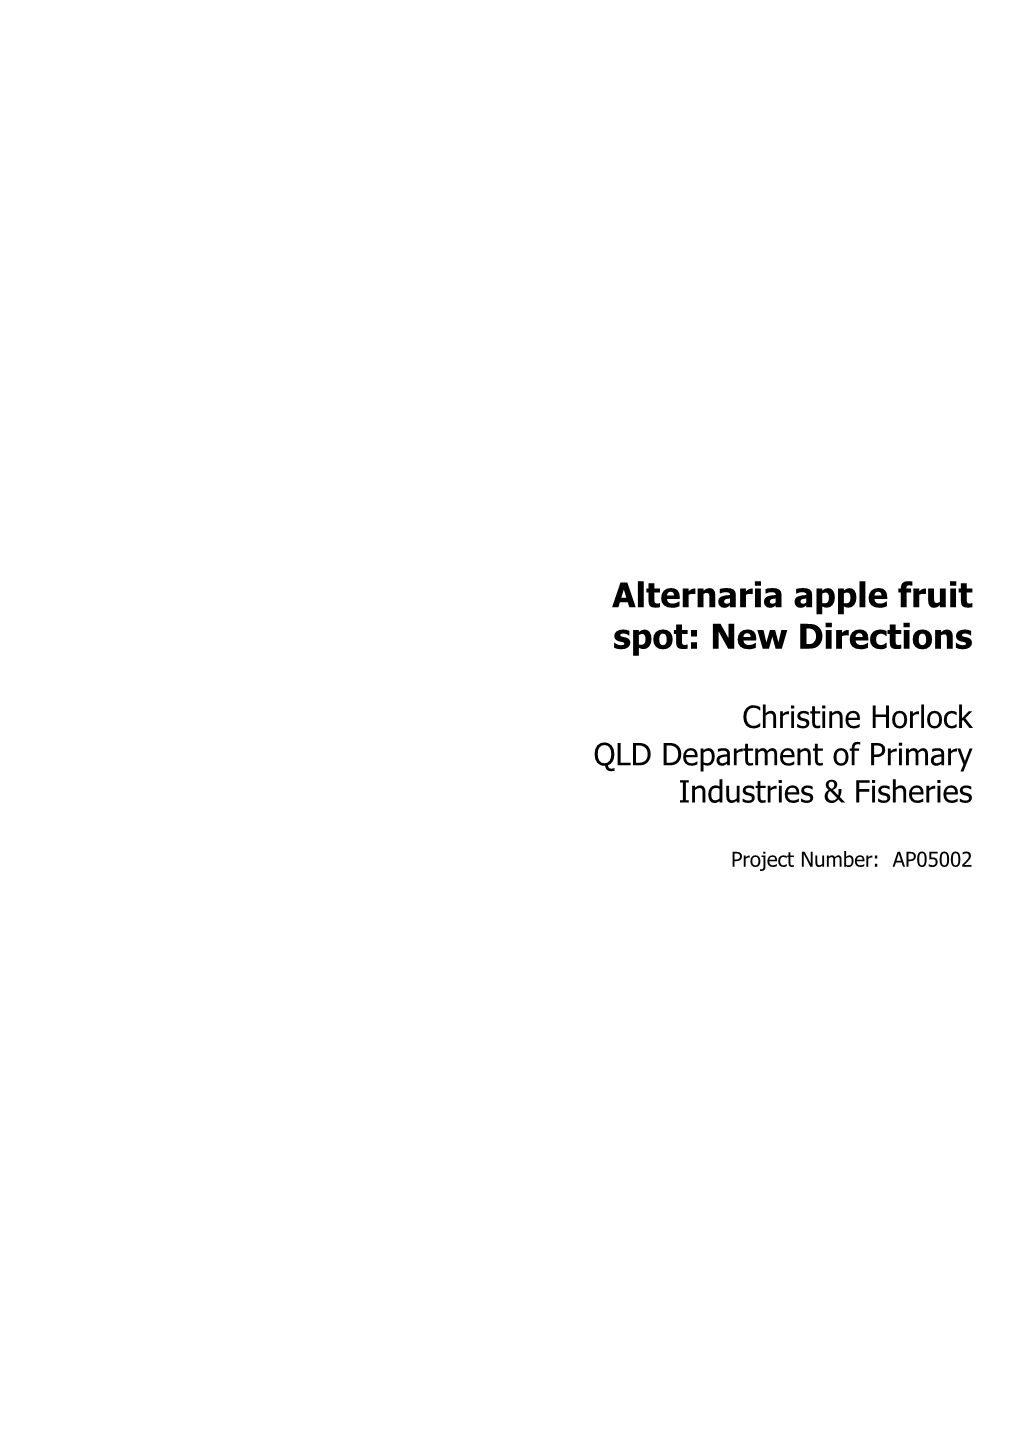 Alternaria Apple Fruit Spot: New Directions